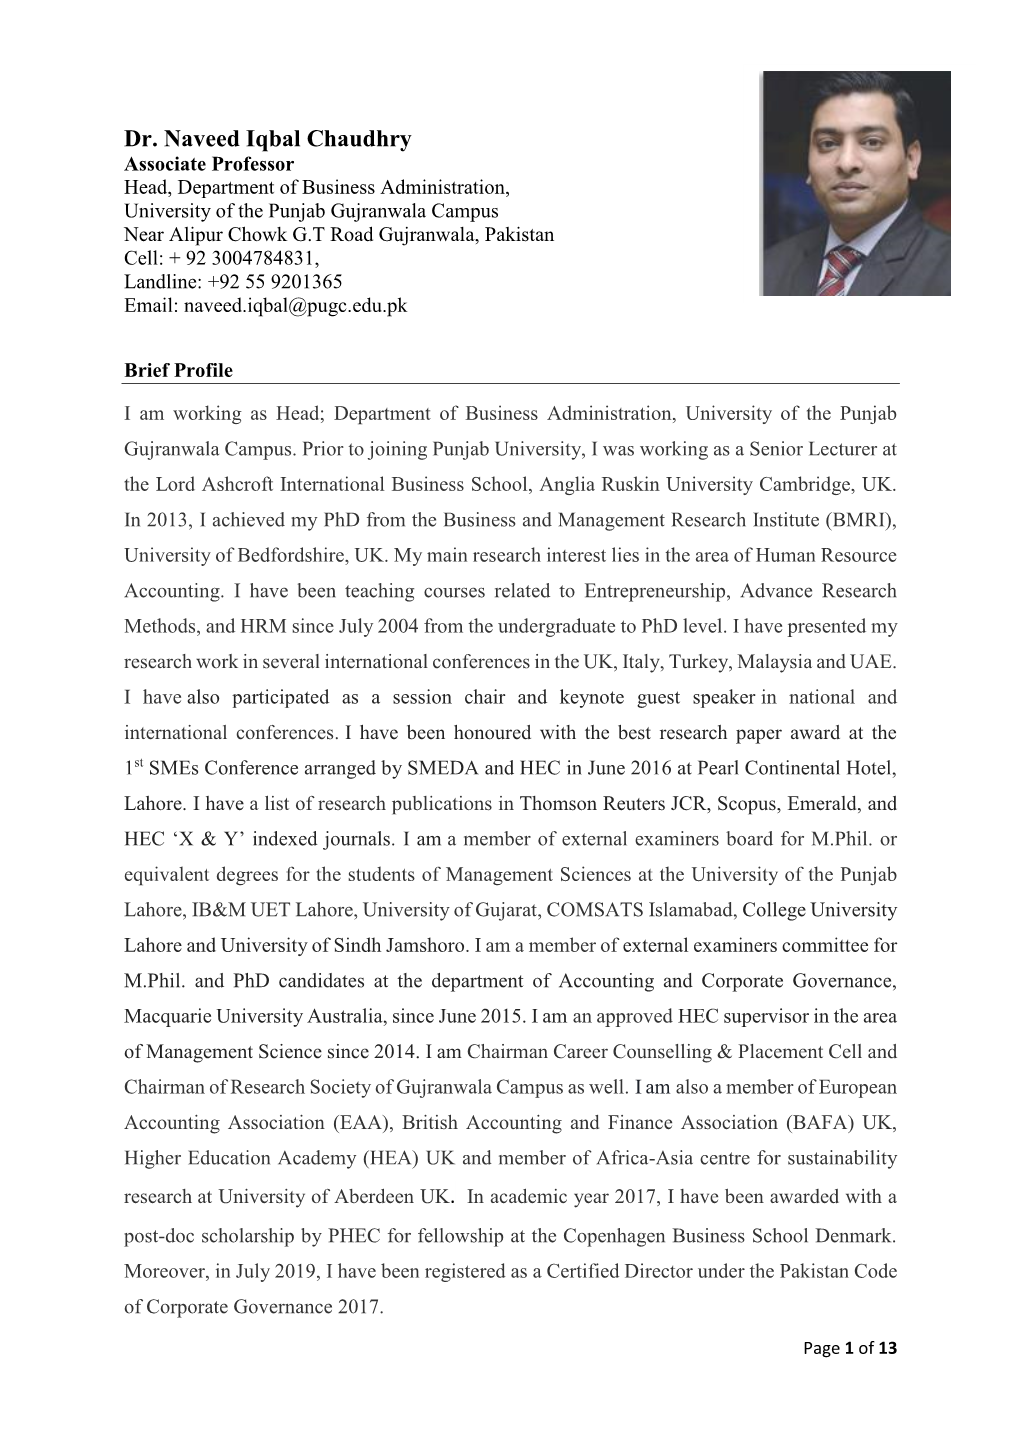 CV of Dr. Naveed Iqbal Chaudhry